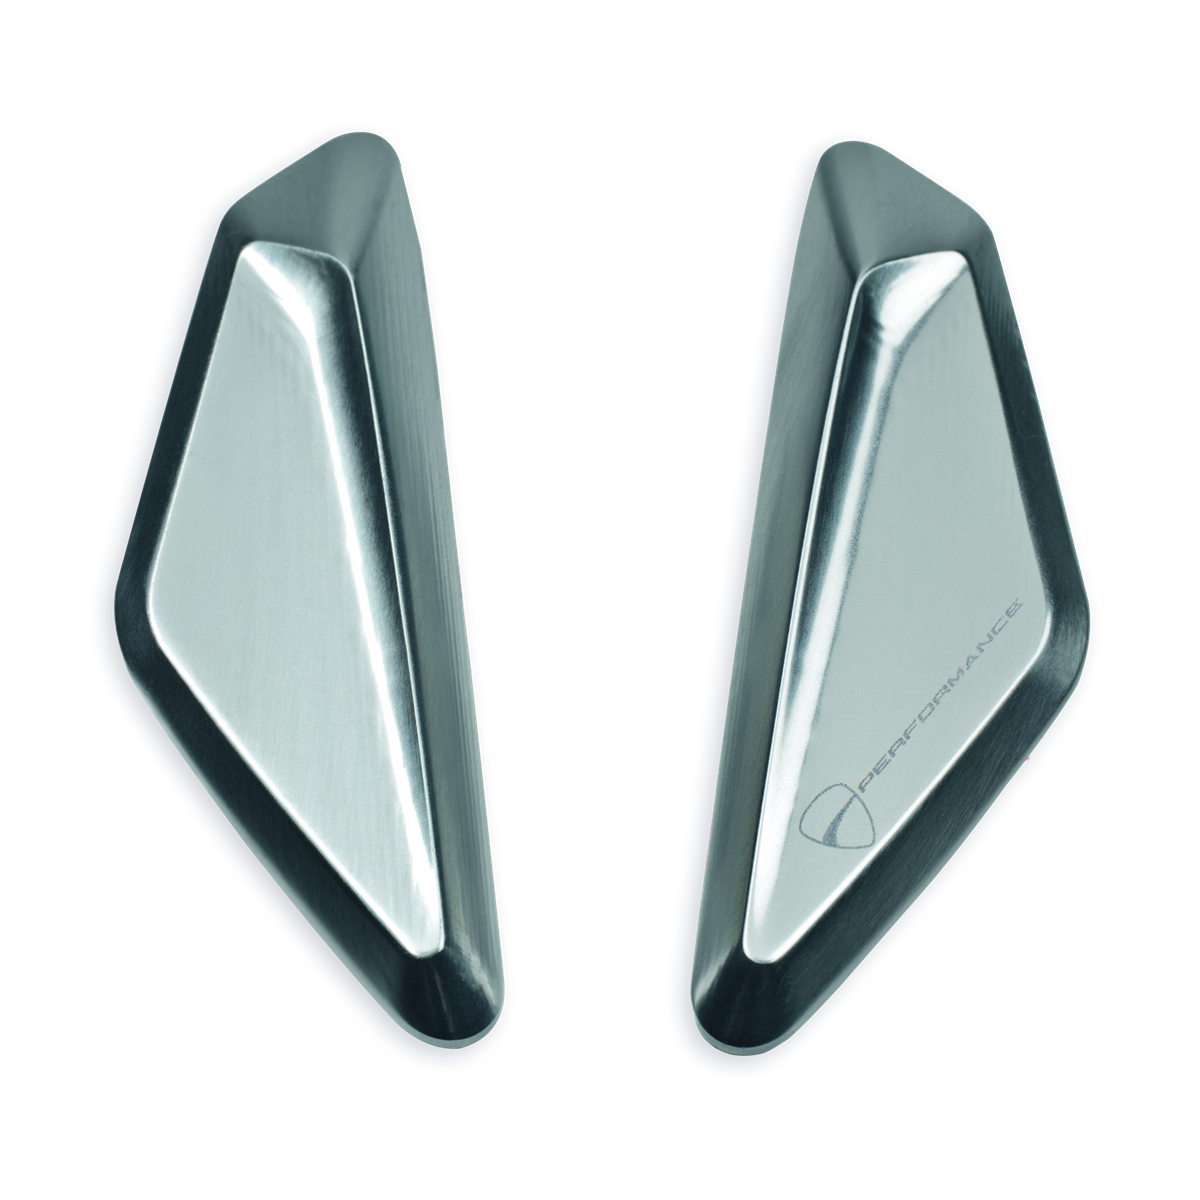 Ducati Aluminium cover for mirror hole.